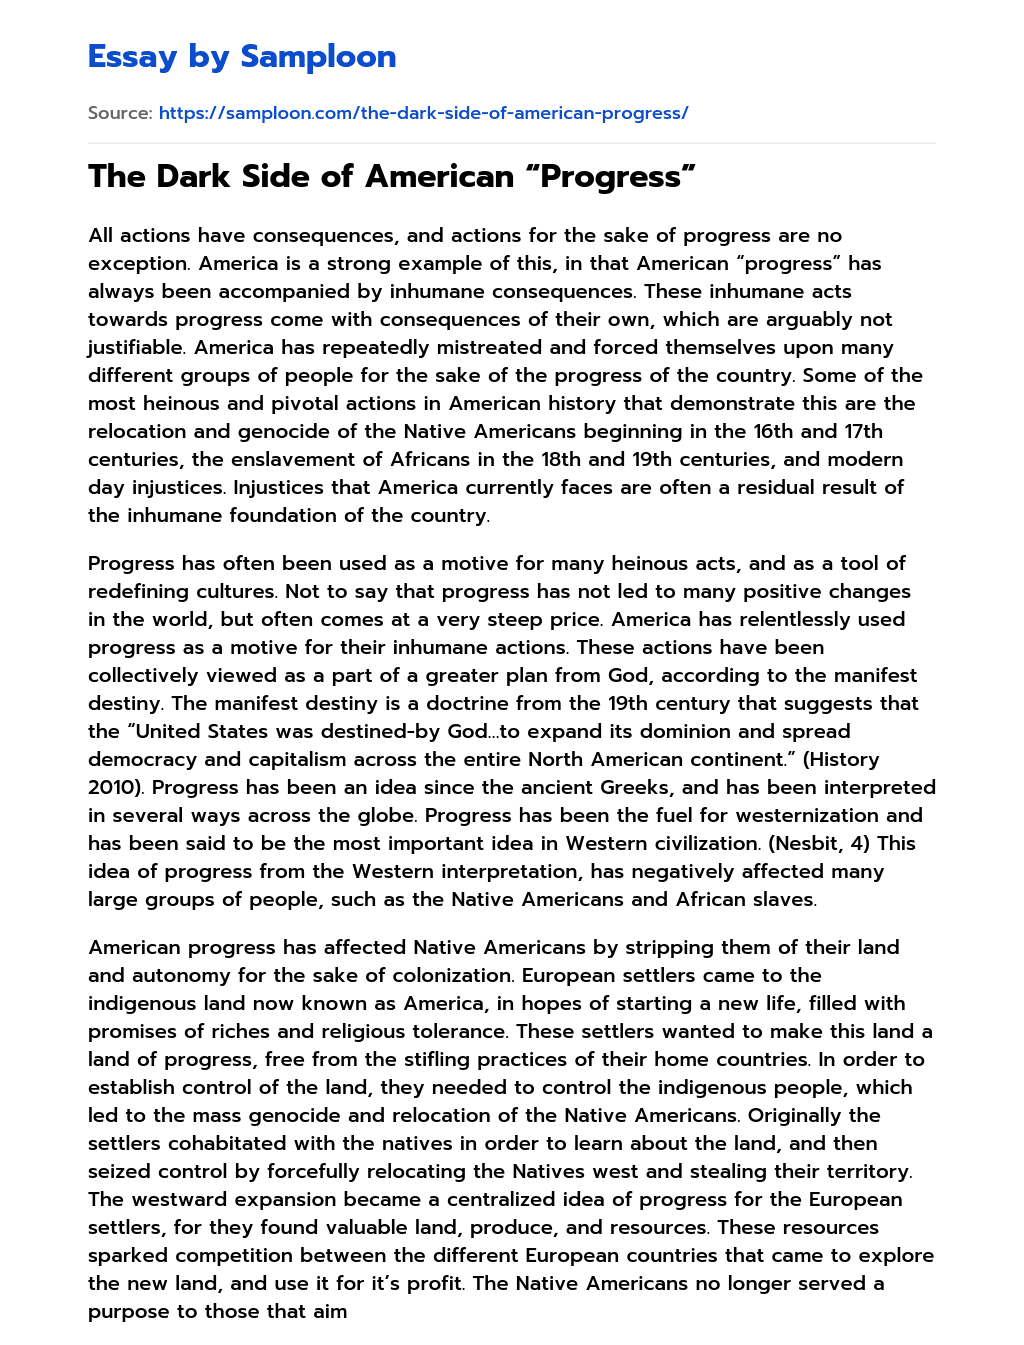 The Dark Side of American “Progress” essay